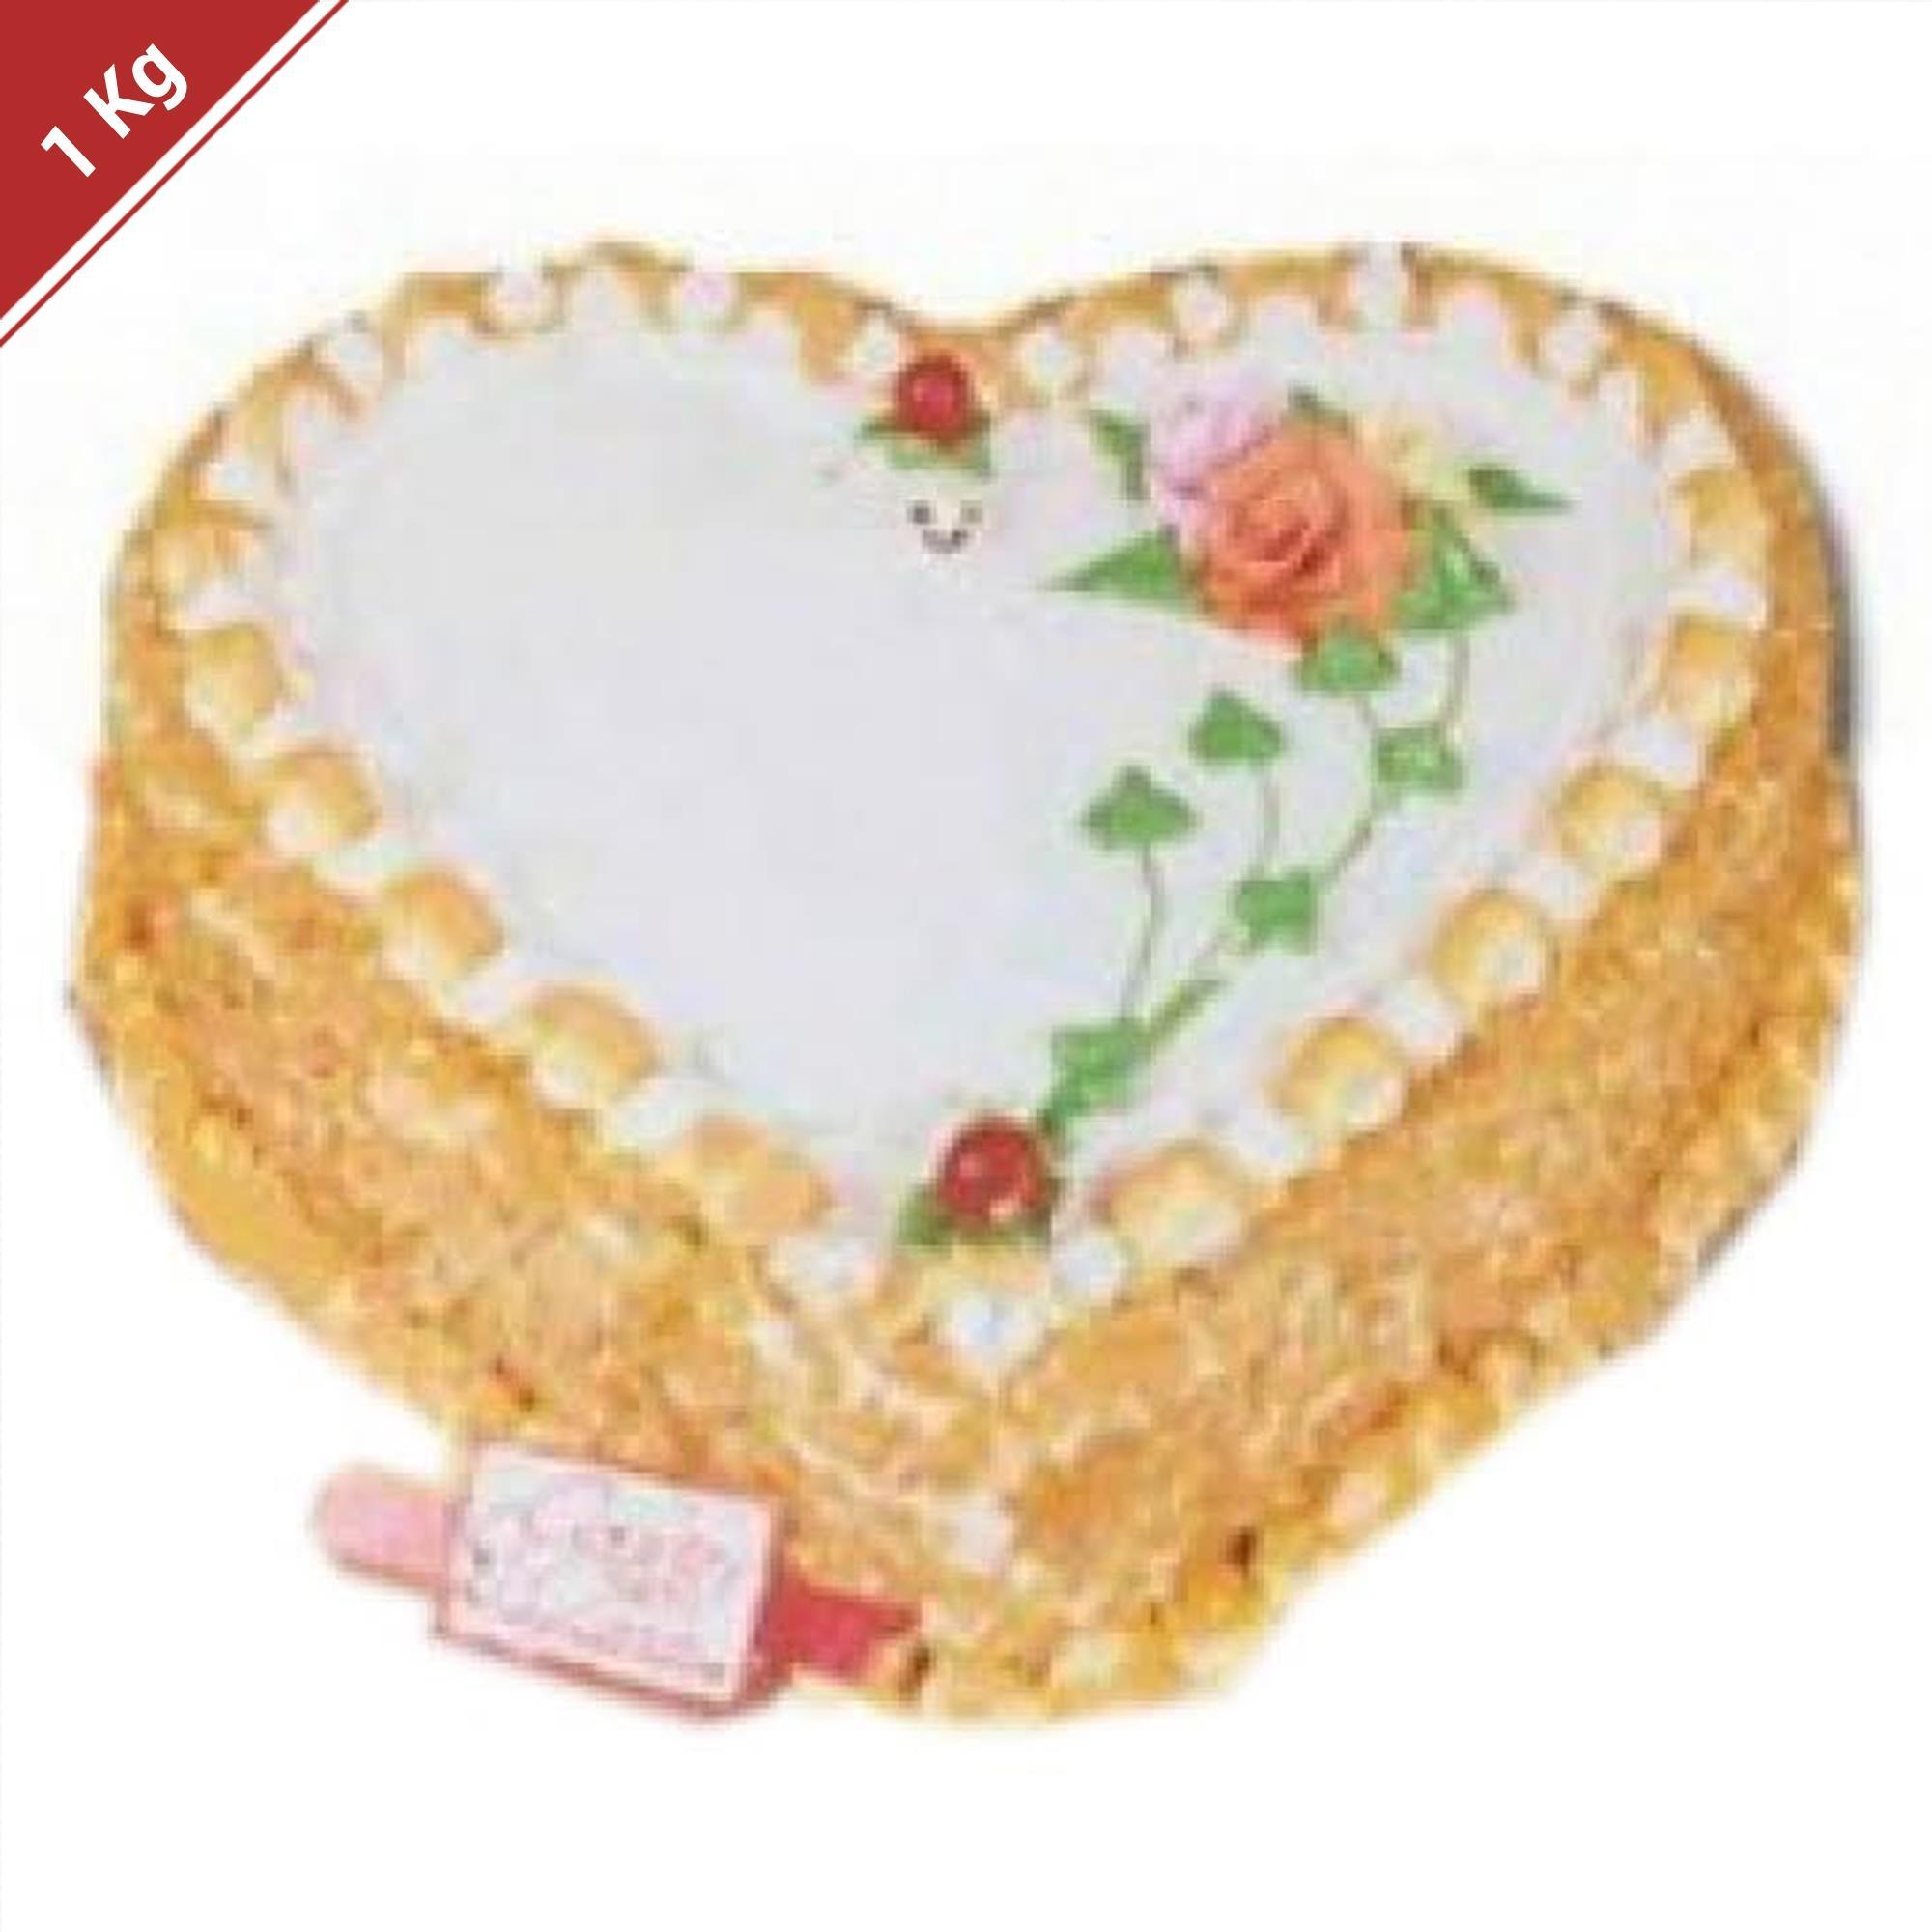 Heart Shaped Butterscotch Cake Price & Design | YummyCake